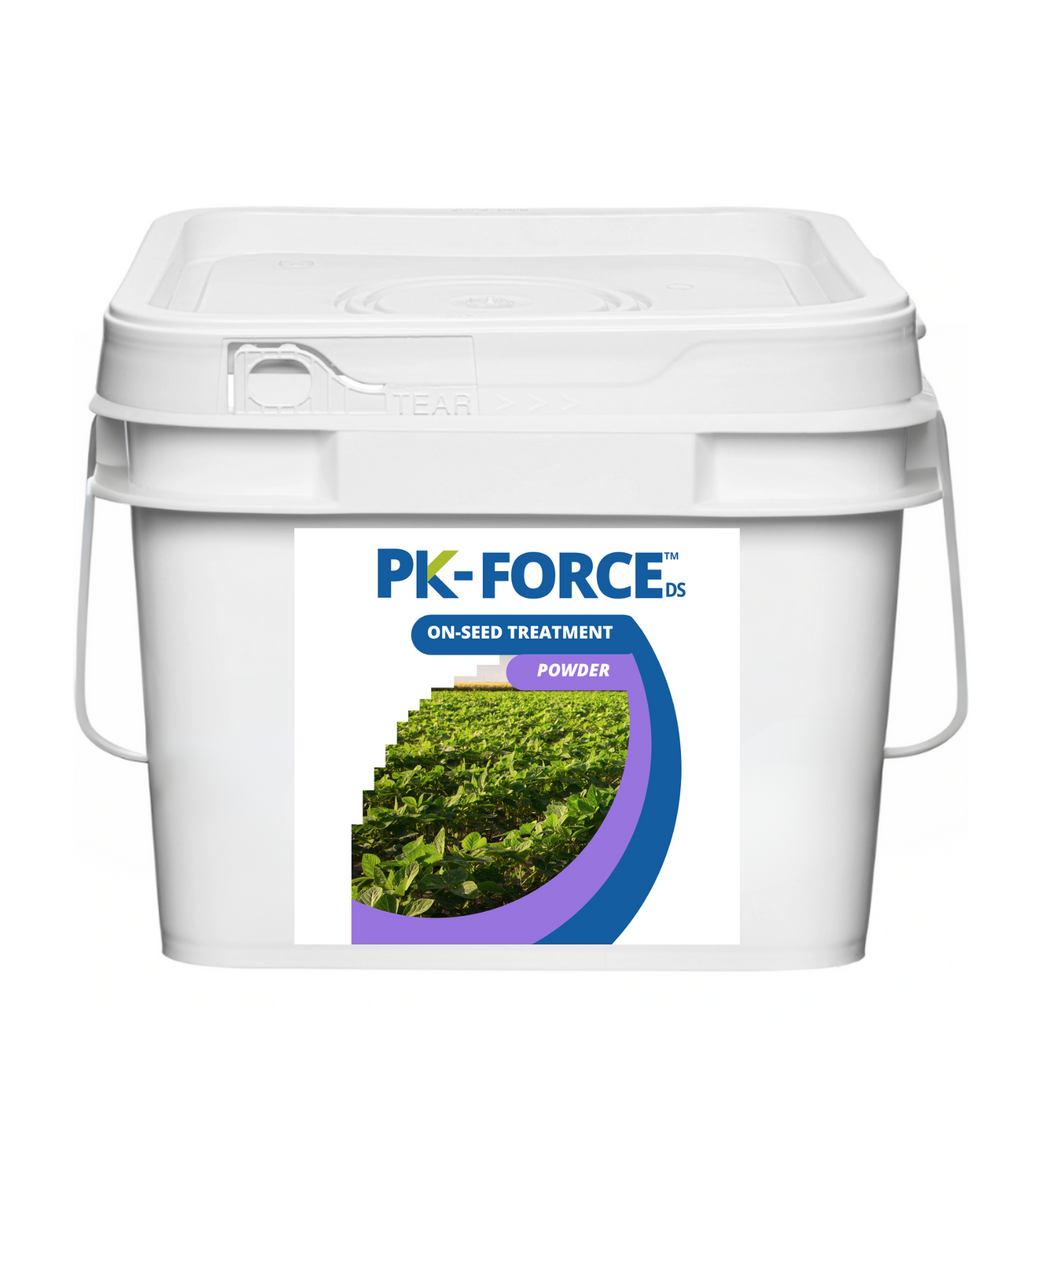 PK-FORCE DS™ PHOSPHORUS/POTASSIUM INOCULANT - POWDER